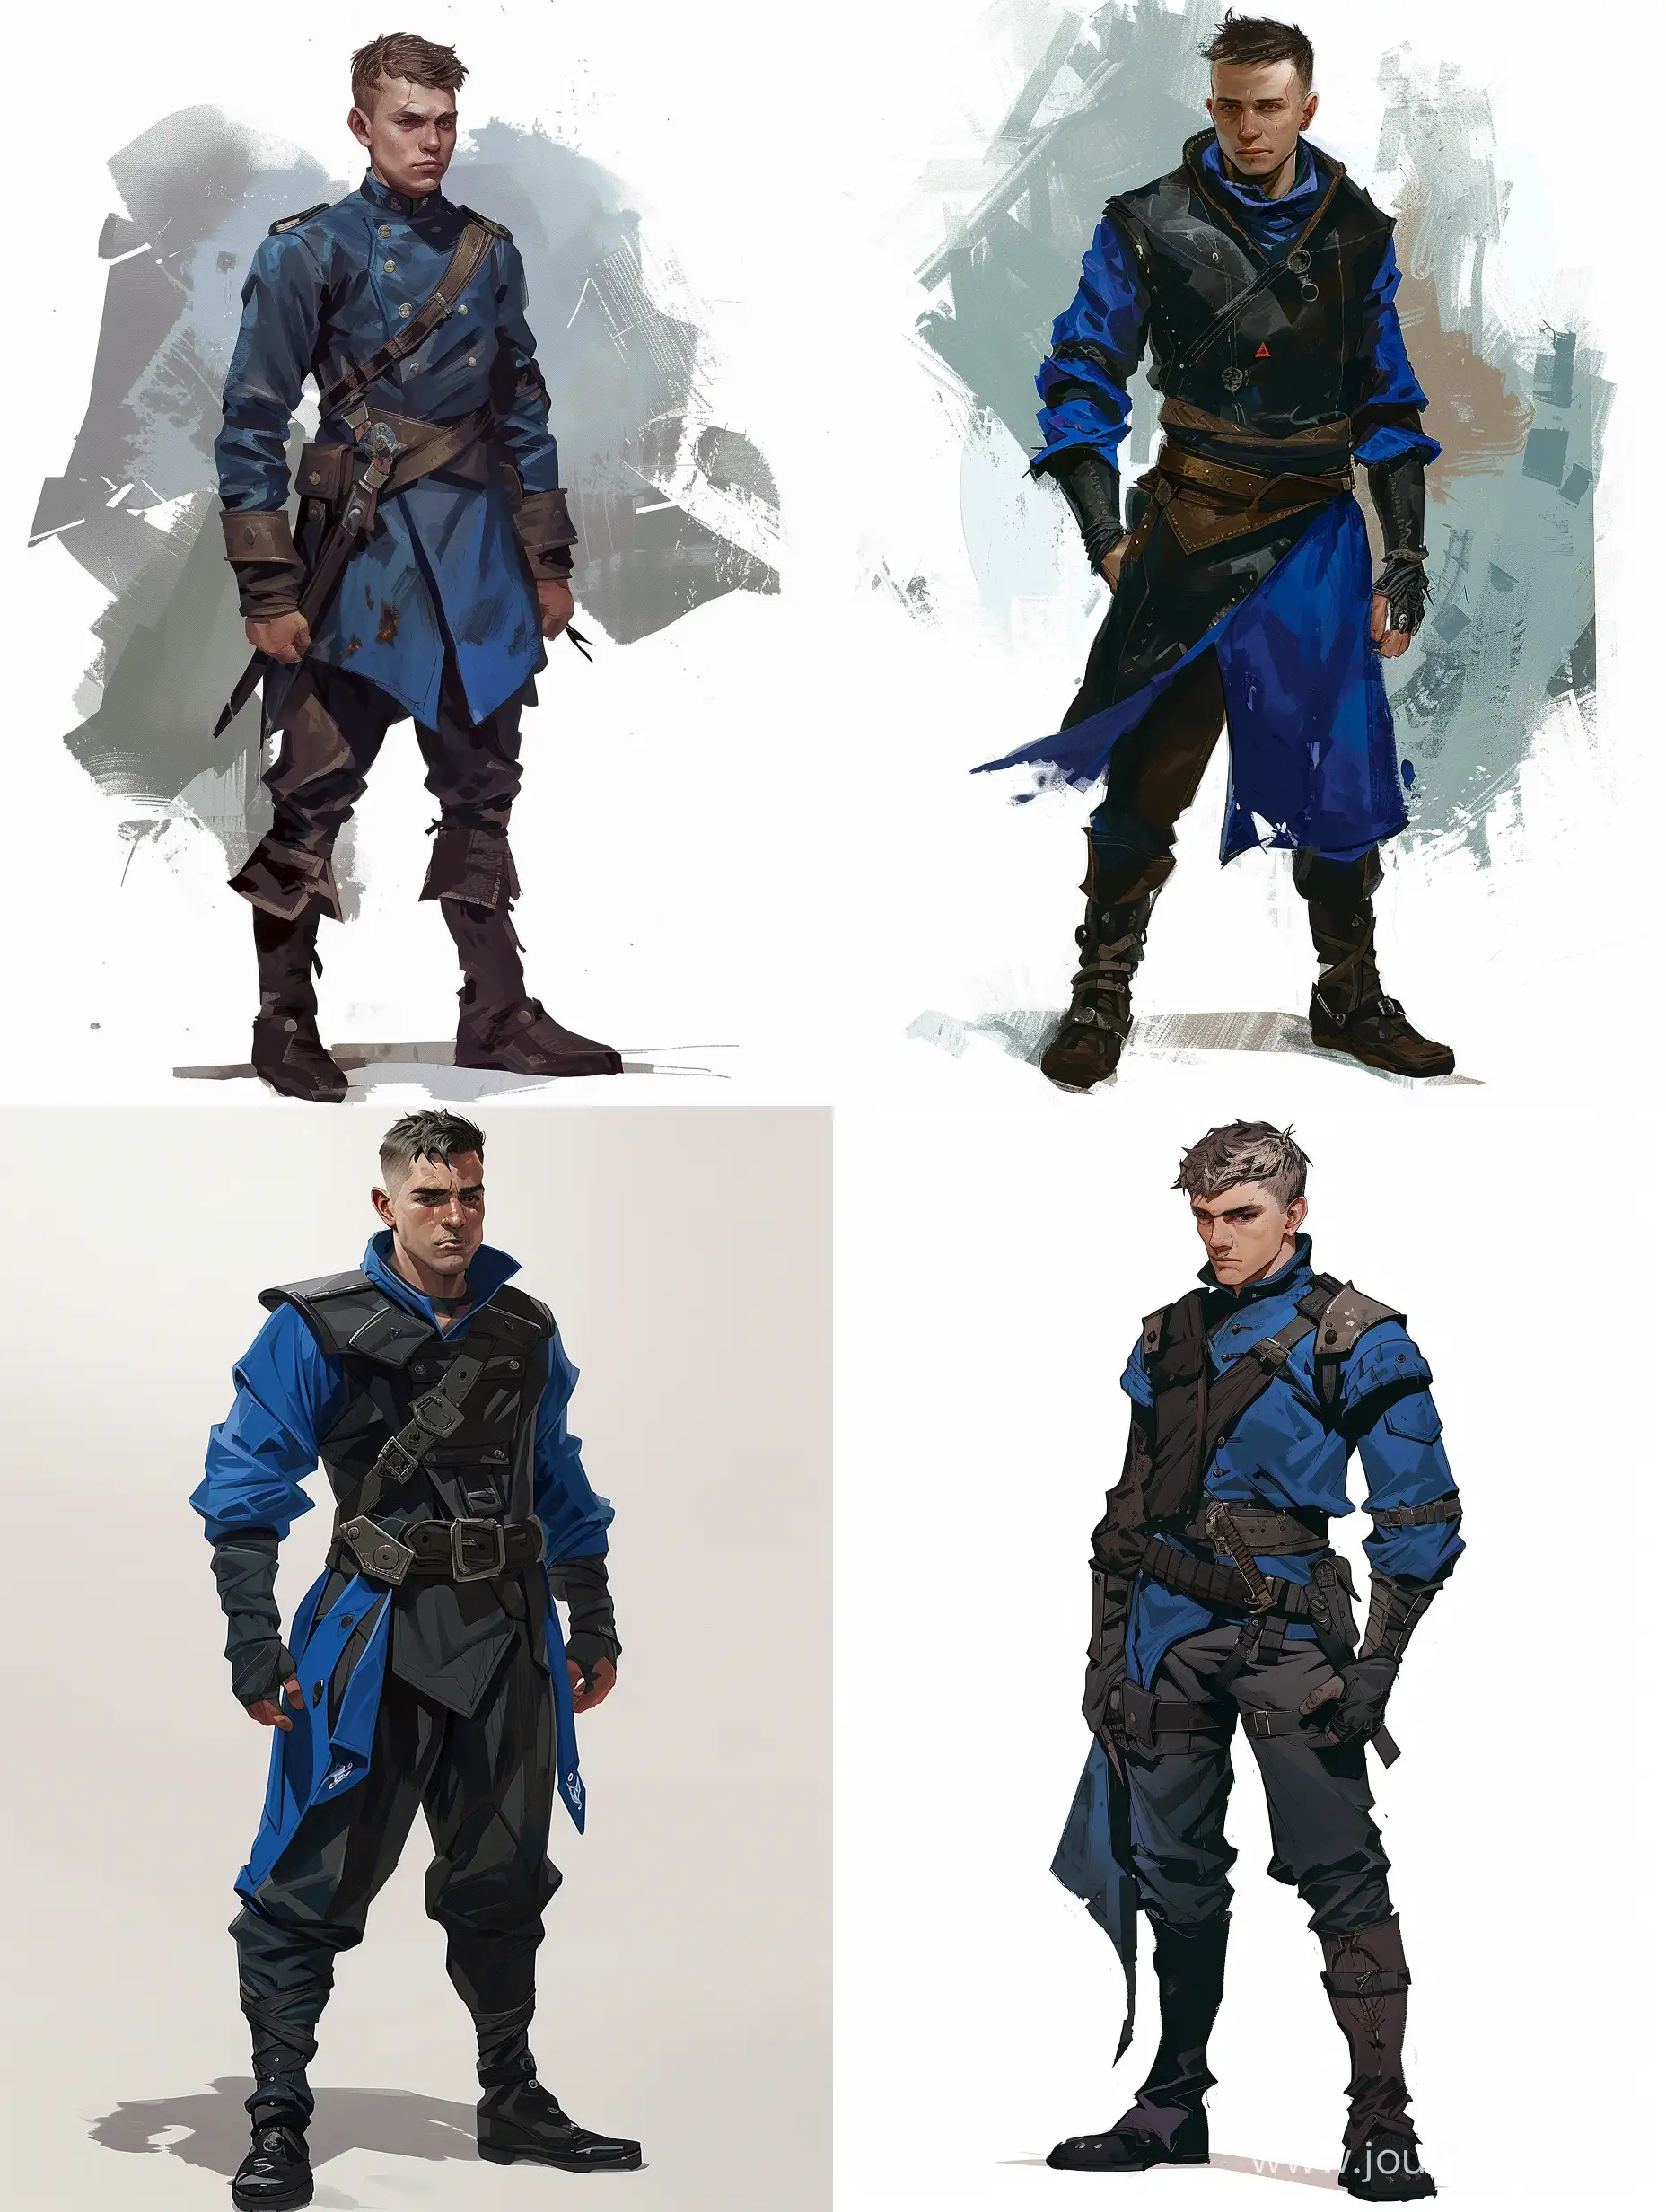 Ganish-Veteran-Mercenary-Dark-Fantasy-Character-with-Cunning-Expression-and-Strategic-Attire